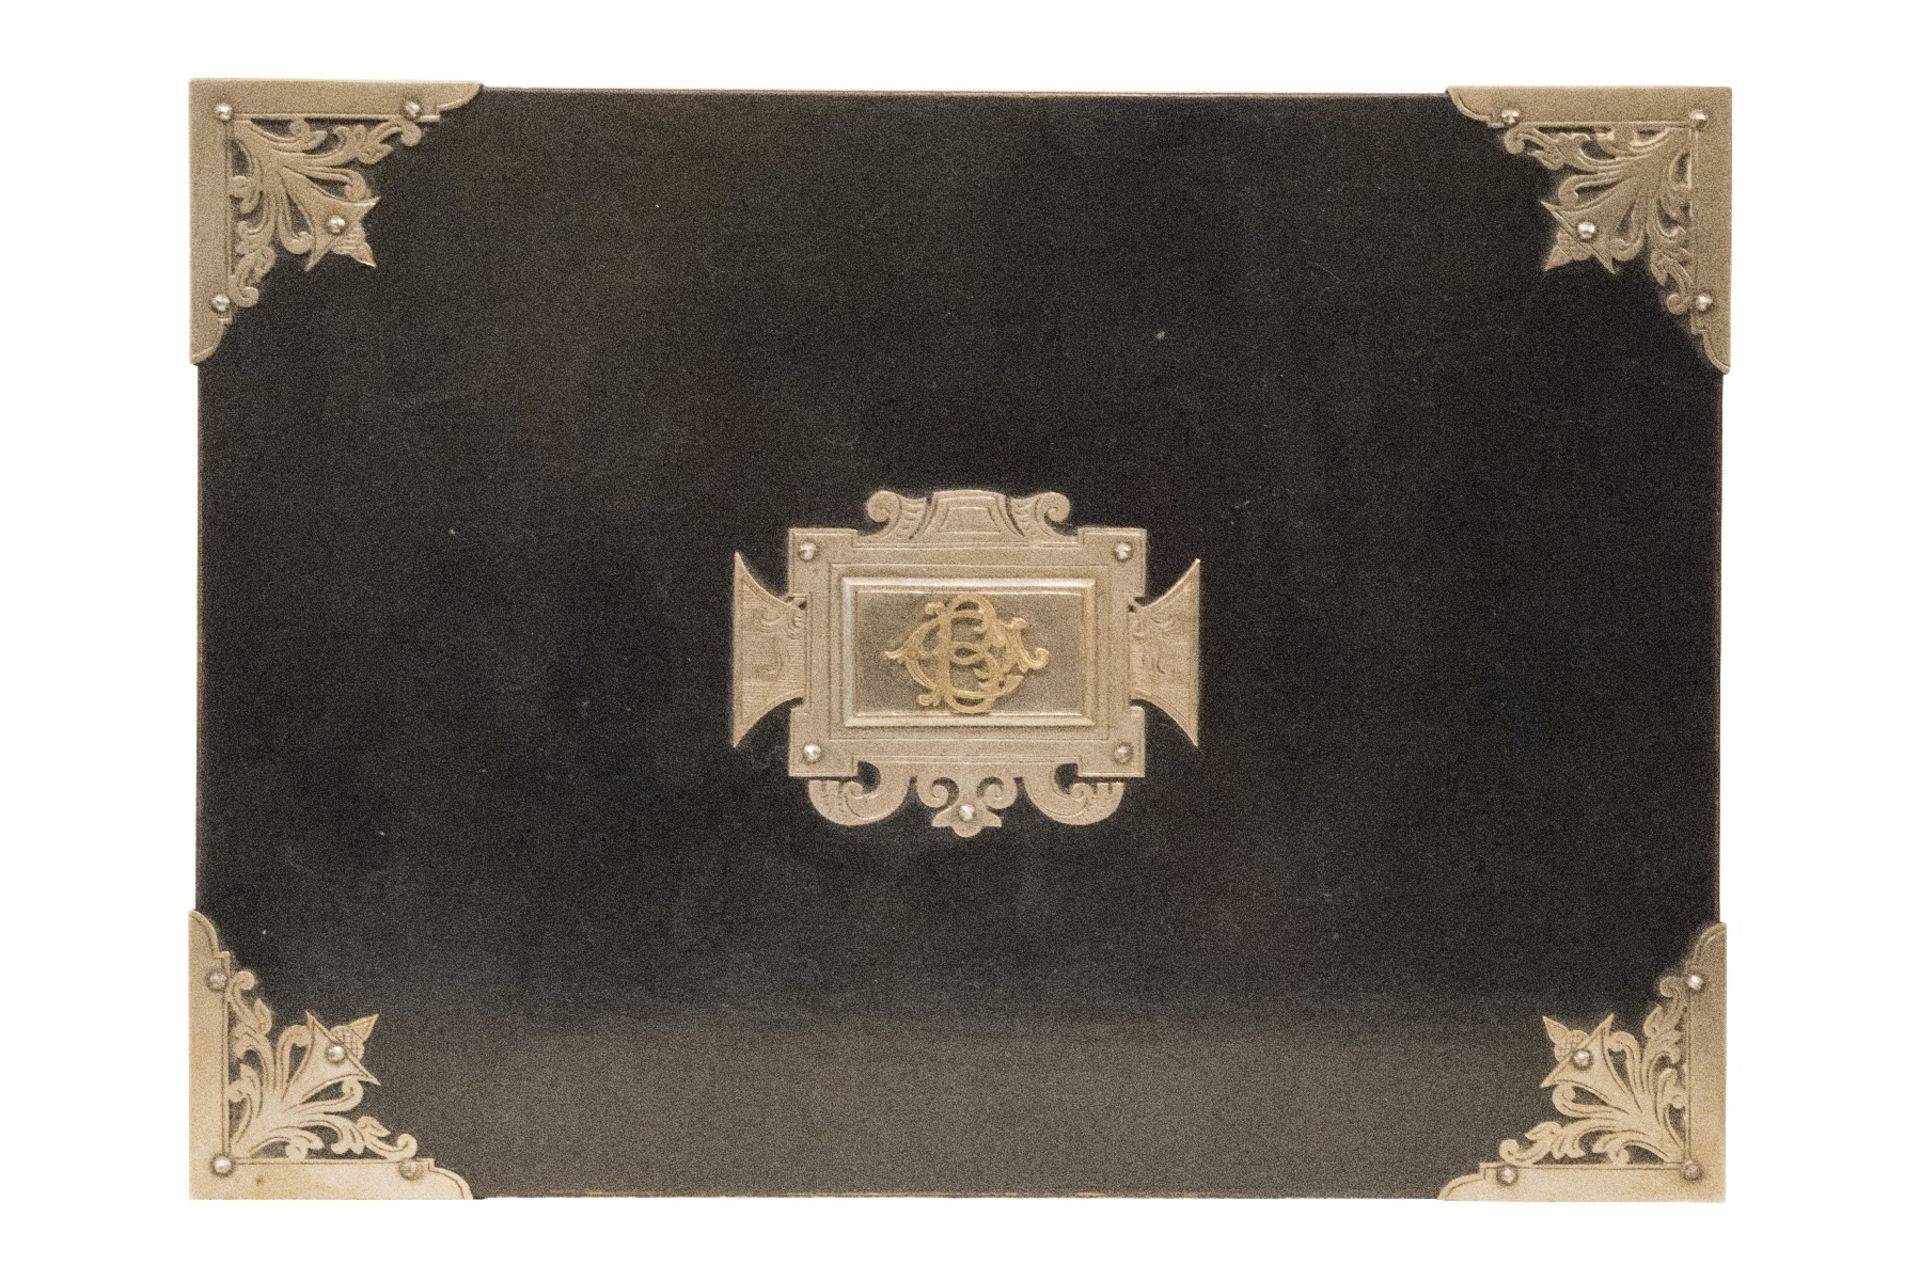 Holzschatulle mit Metallbeschlaegen | Wooden casket with metal fittings - Image 5 of 9